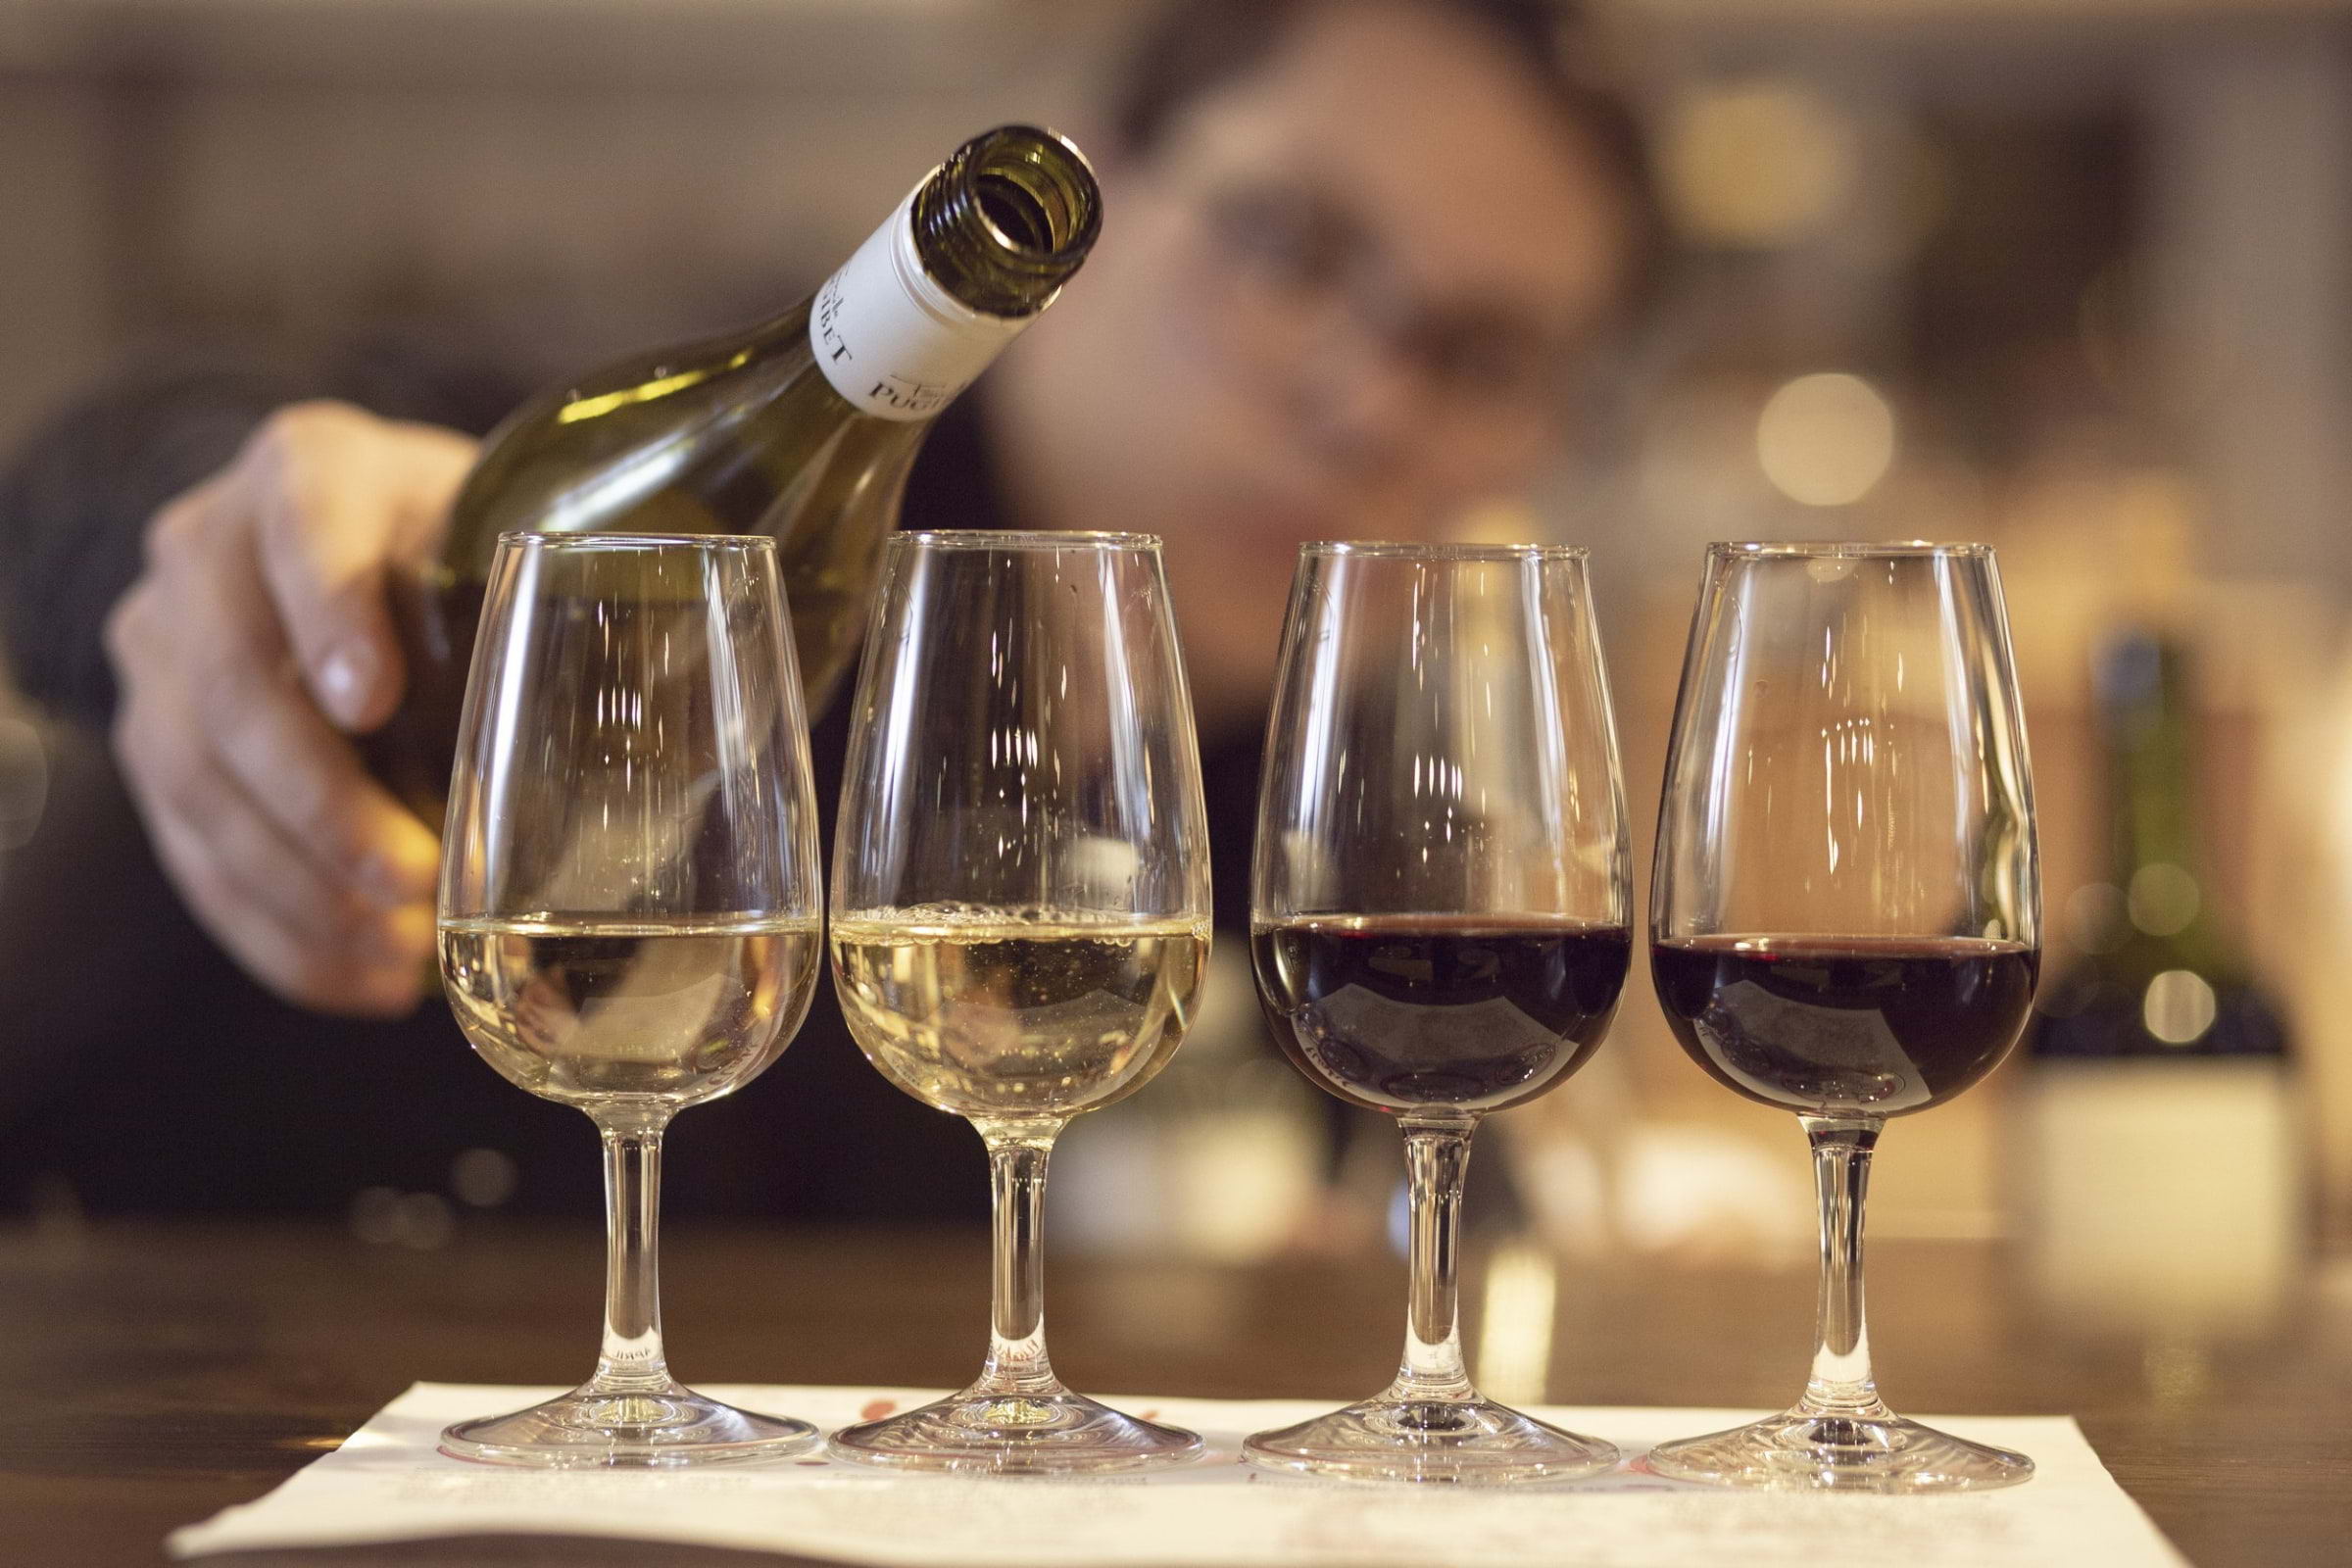 London's iconic wine bar unveils budget-friendly wine tasting